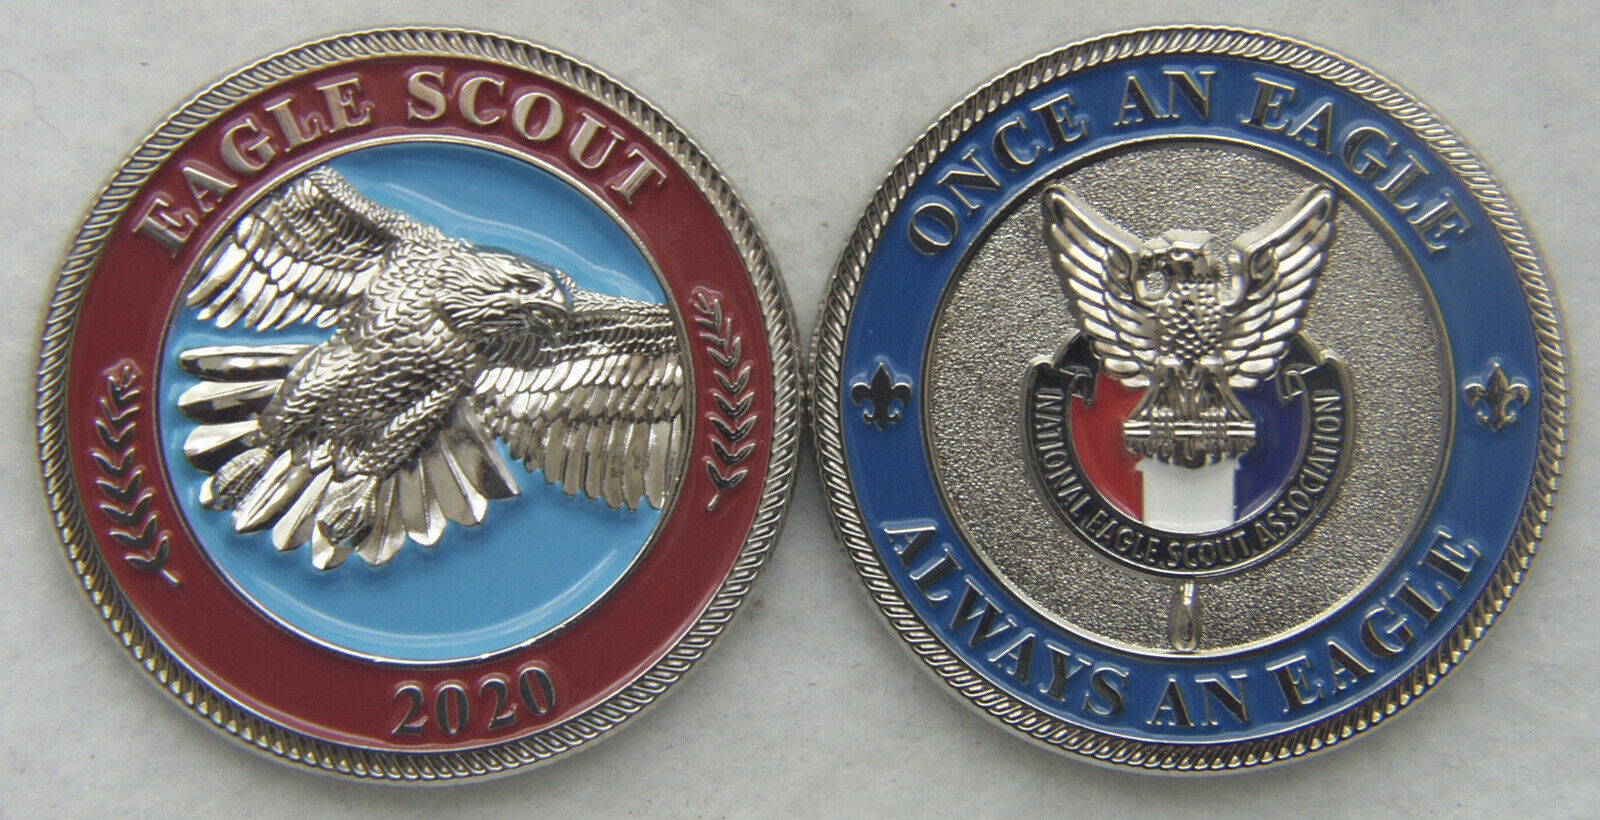 Bsa-nesa 2020 Eagle Scout Coin